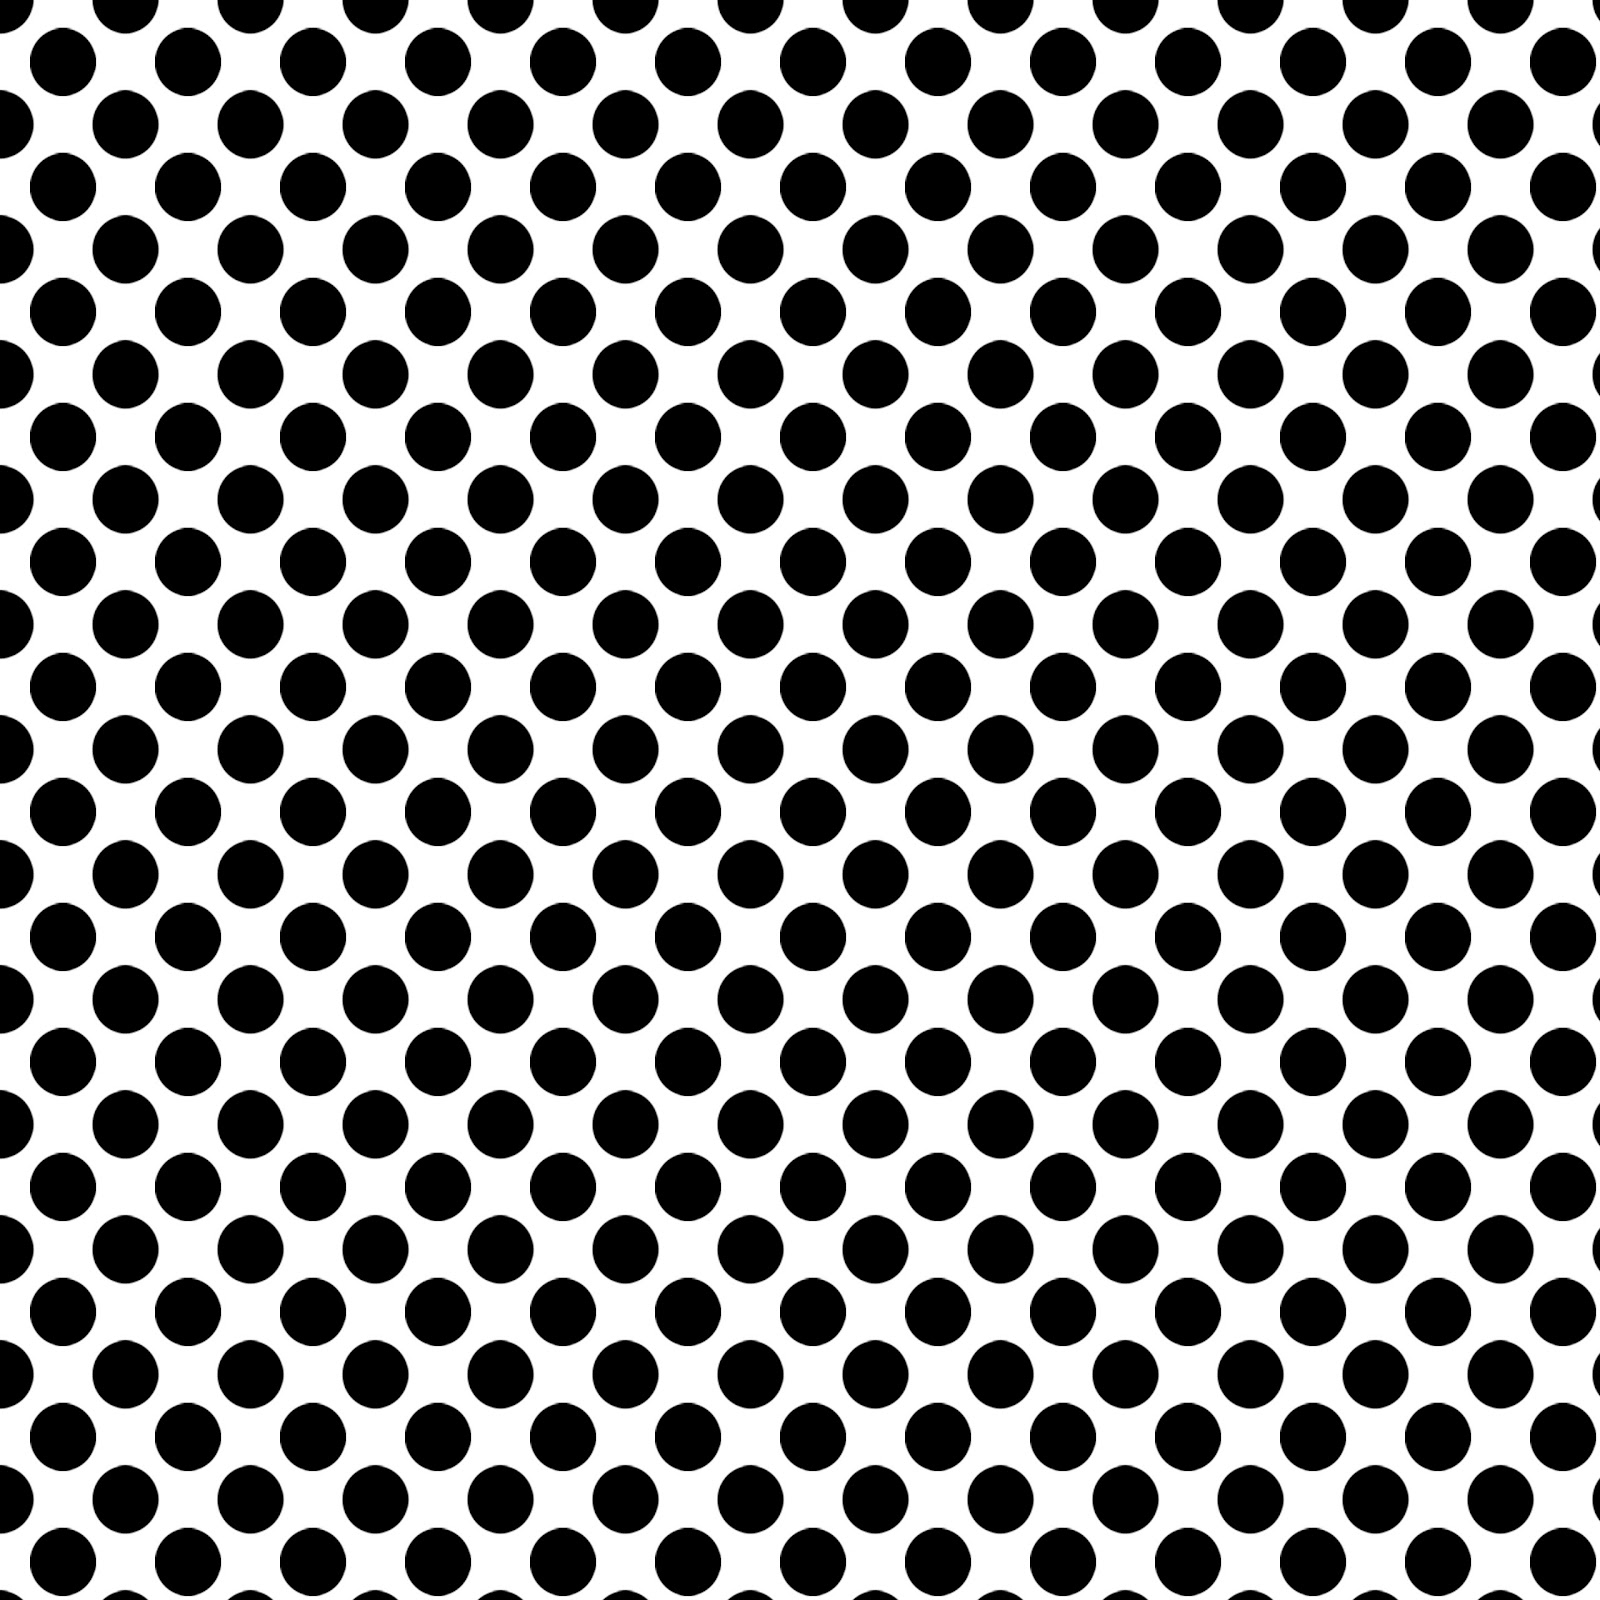 Stampin DAmour FREE Digi Scrapbook Paper   Black White Polka Dots 1600x1600